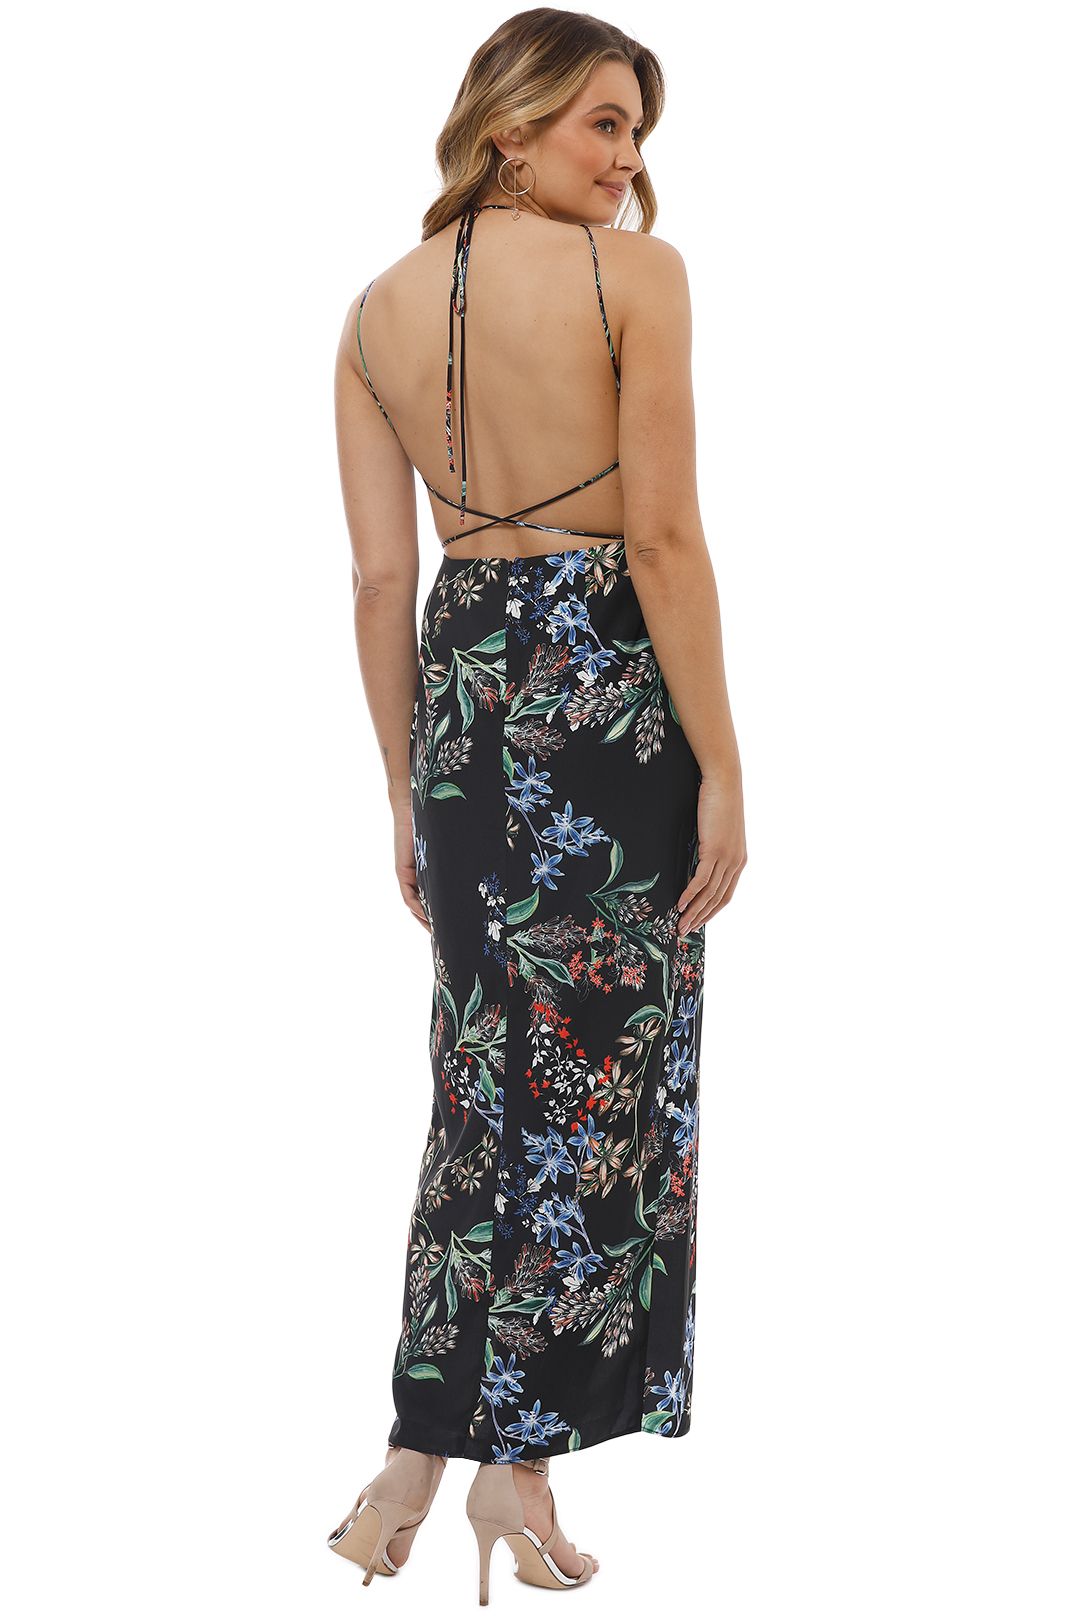 Stylestalker - Avalon Maxi Dress - Black Floral - Back 